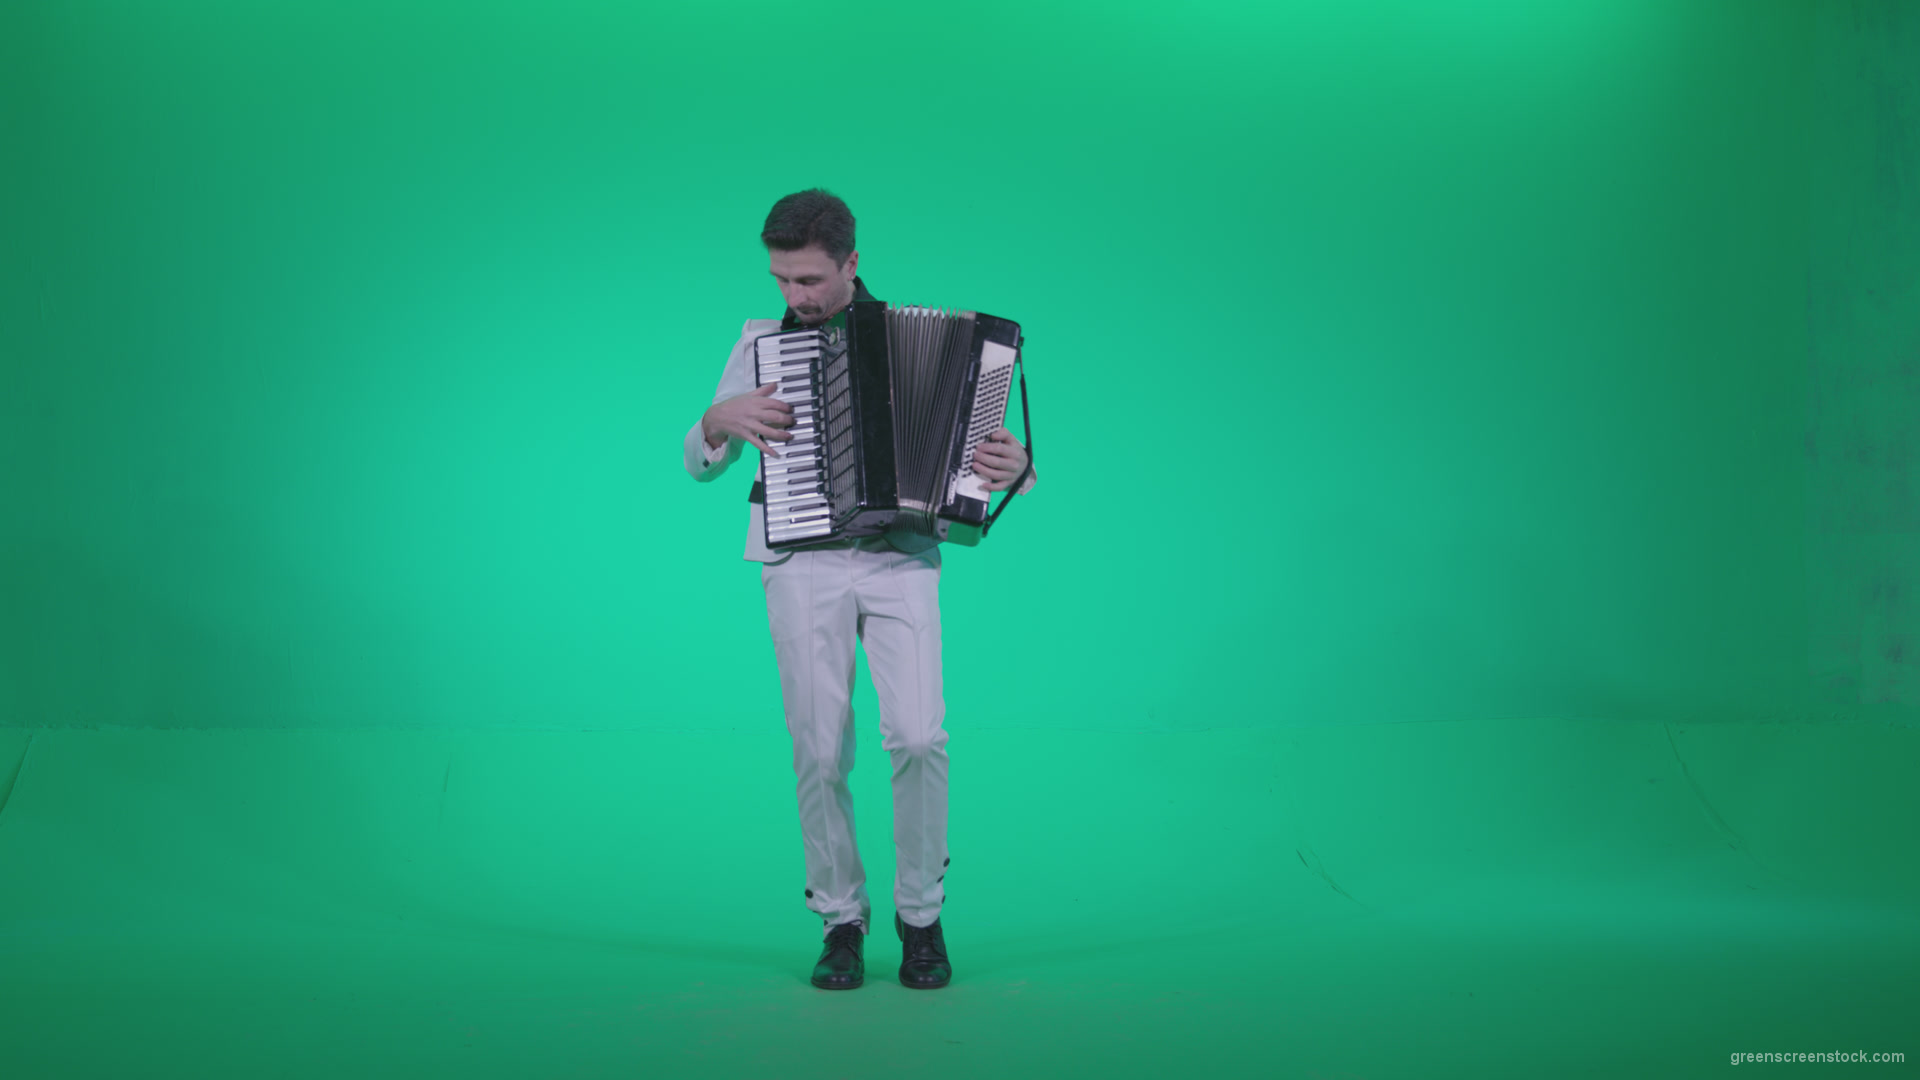 Black-Accordion-Virtuoso-performs-ba10-Green-Screen-Video-Footage_001 Green Screen Stock